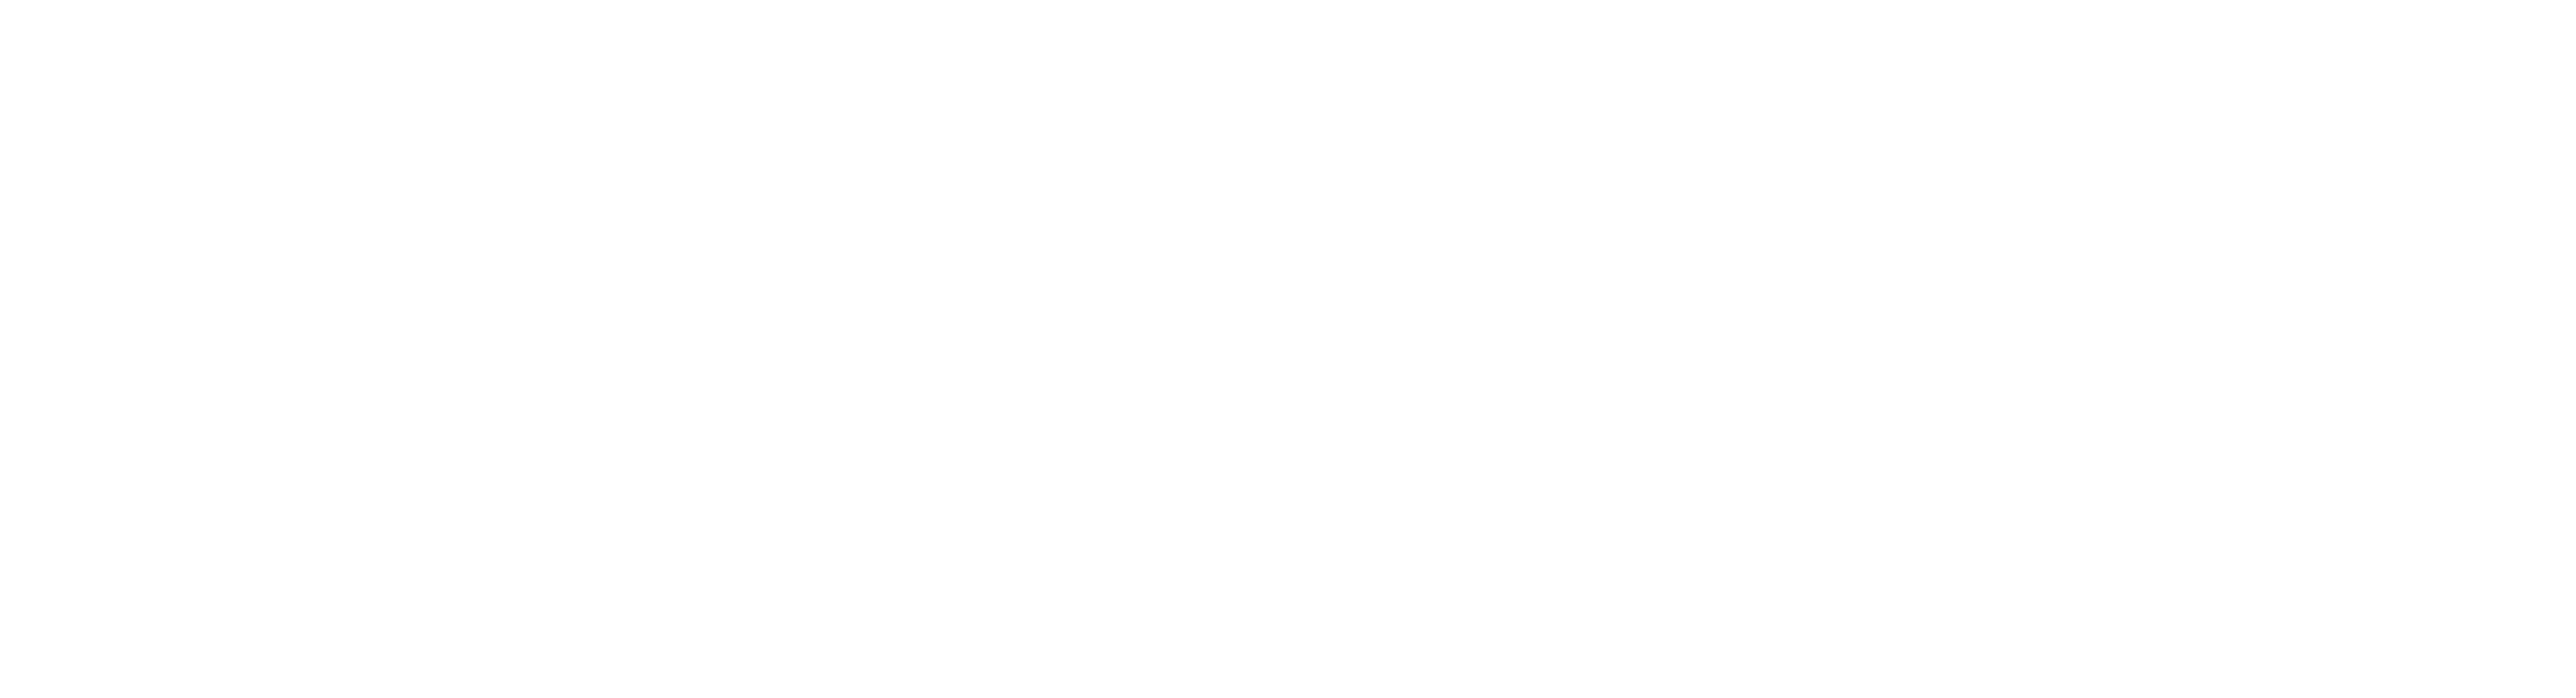 Episode 1: Digital Asset Ecosystem, With Sean Rooney